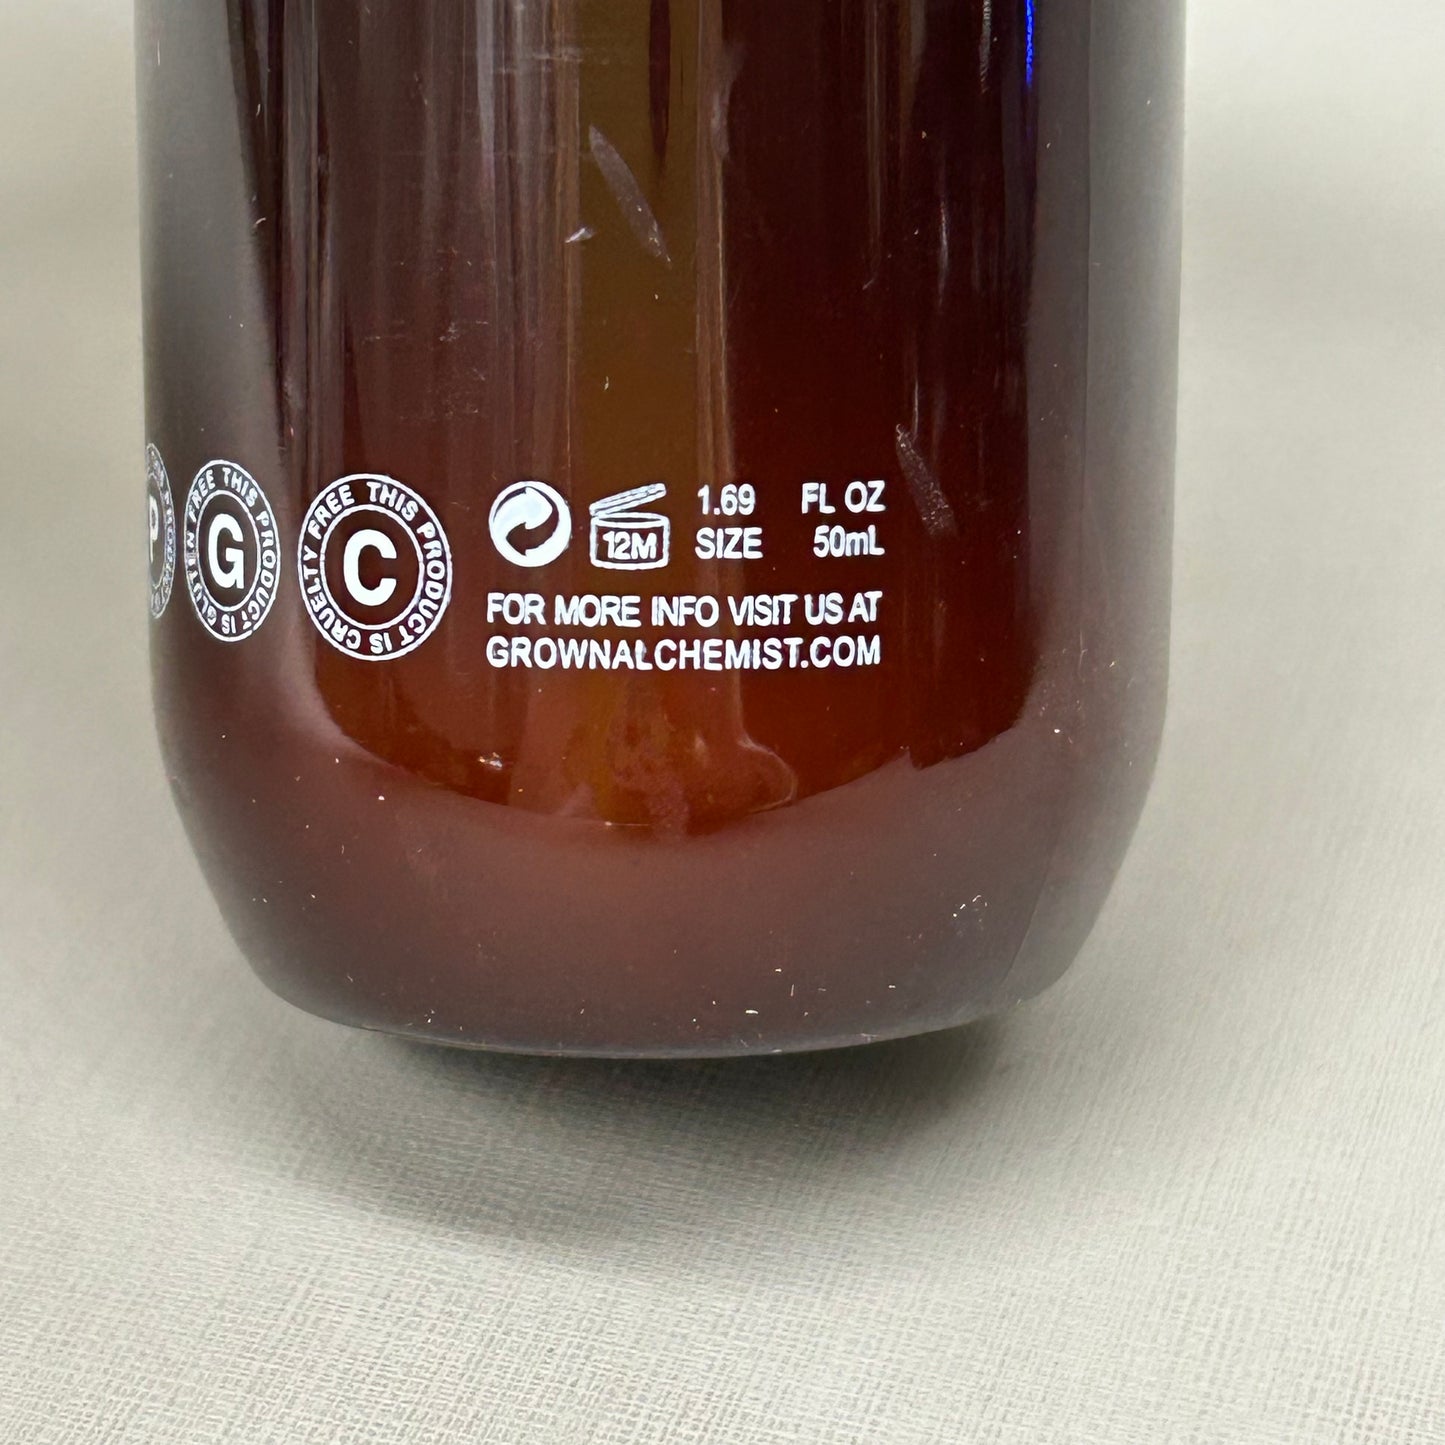 GROWN ALCHEMIST 12-PACK! Body Cream Mandarin Rosemary Leaf 1.69 fl oz (New)